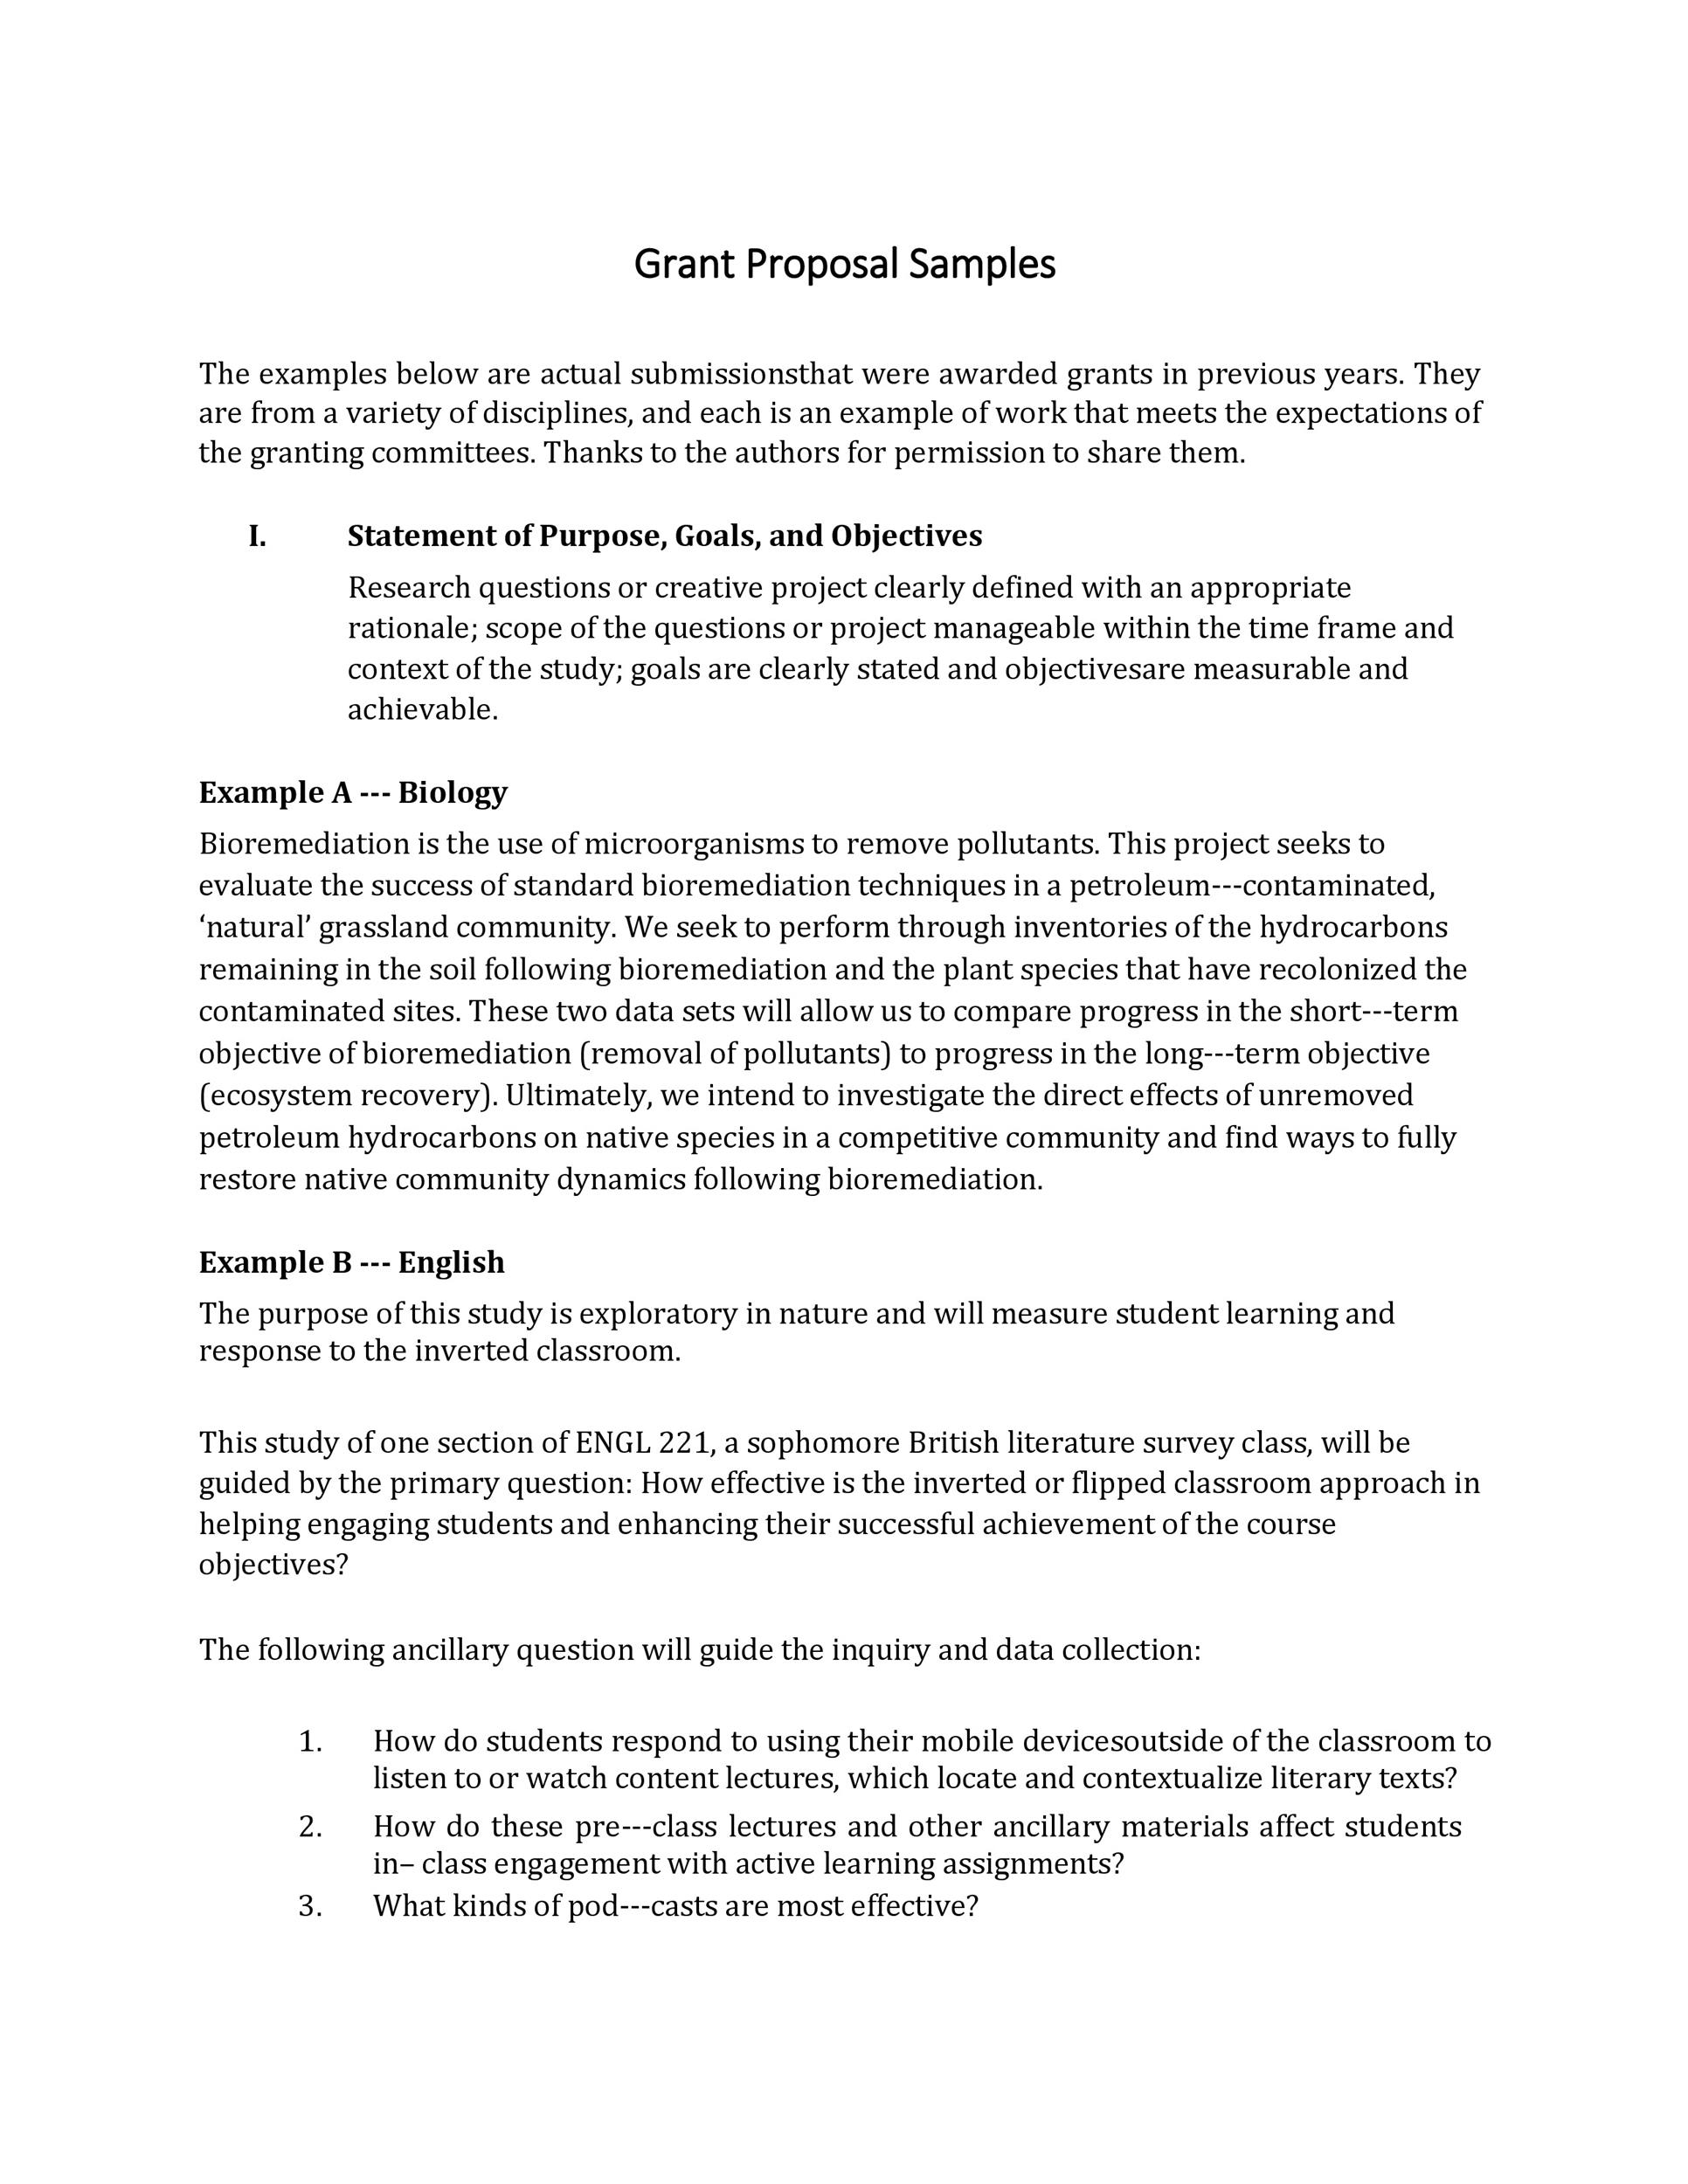 40-grant-proposal-templates-nsf-non-profit-research-templatelab